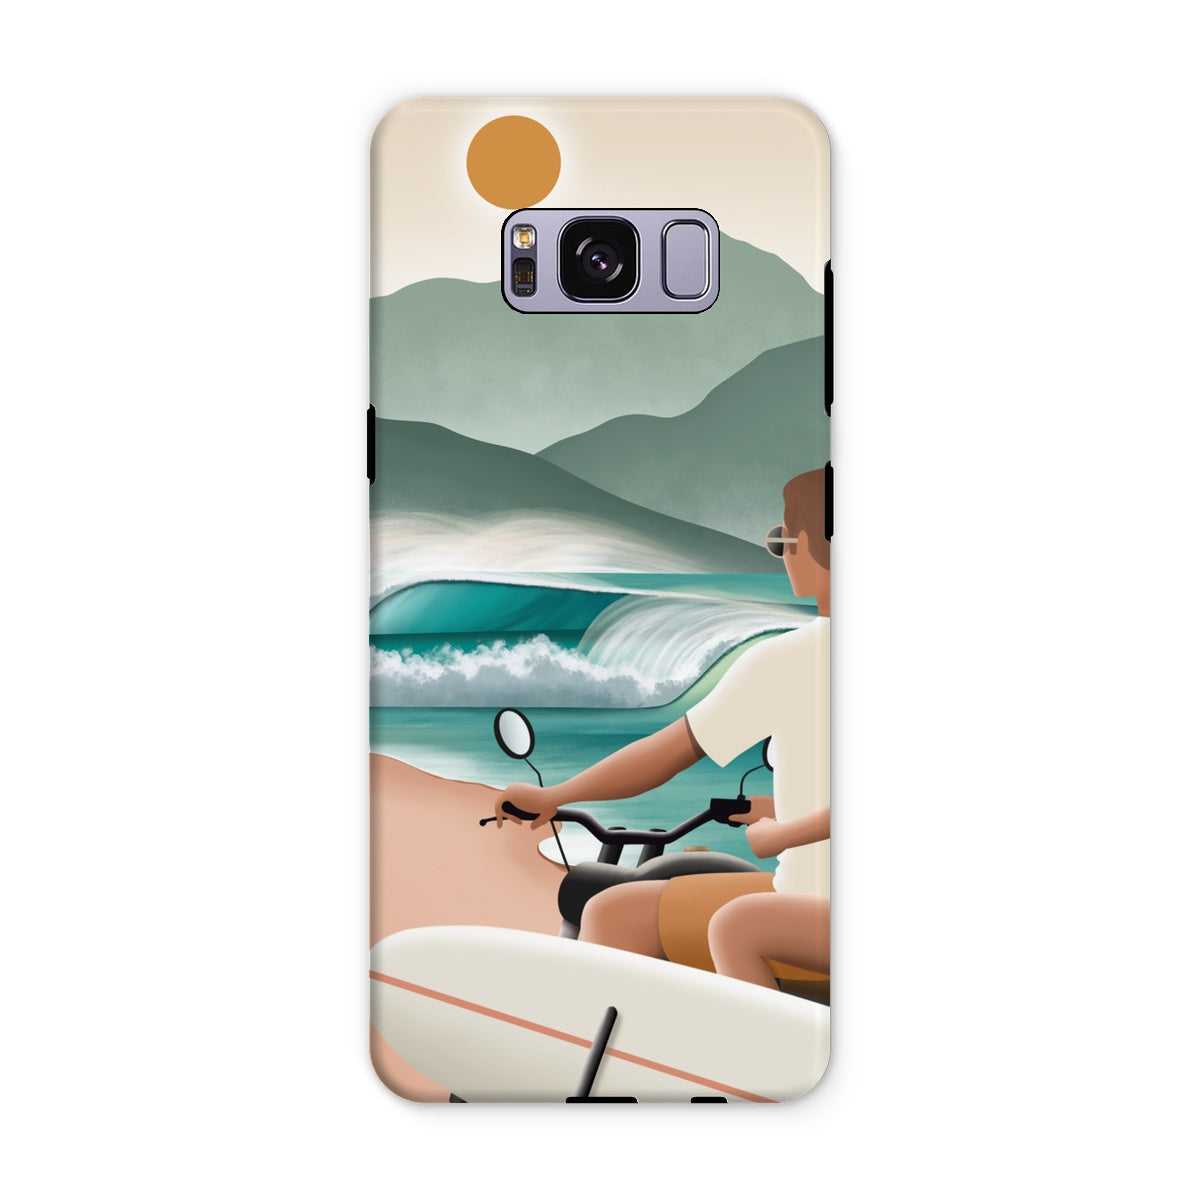 Surf love reinforced phone case